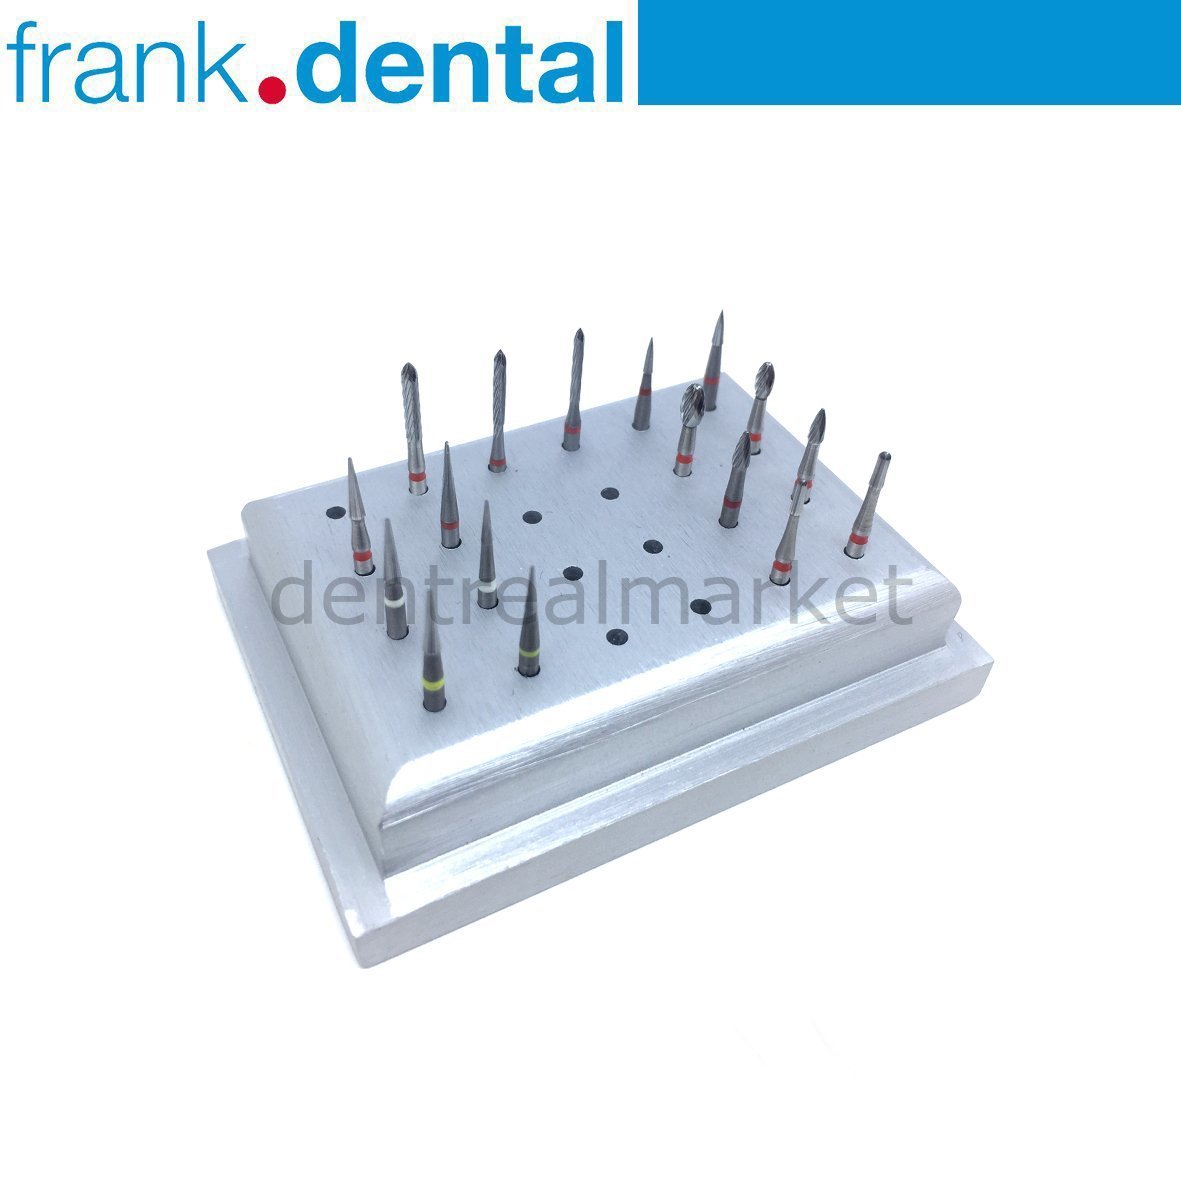 DentrealStore - Frank Dental Carpide Composite and Ceramic - Finishing & Polishing Bur Kit